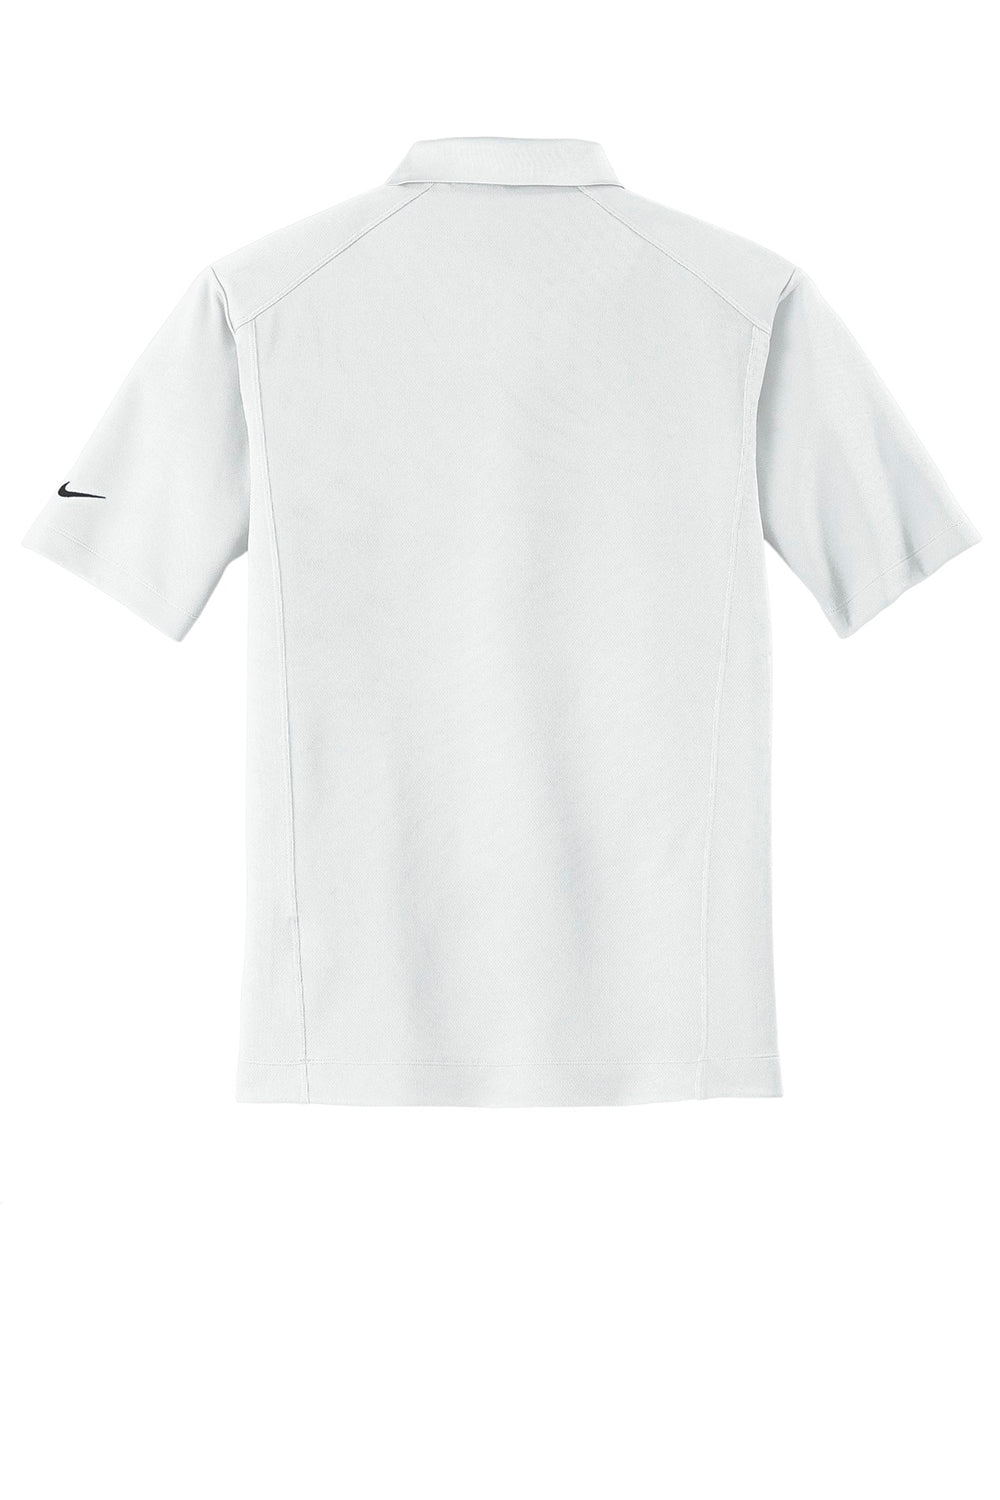 Nike 267020 Mens Classic Dri-Fit Moisture Wicking Short Sleeve Polo Shirt White Flat Back